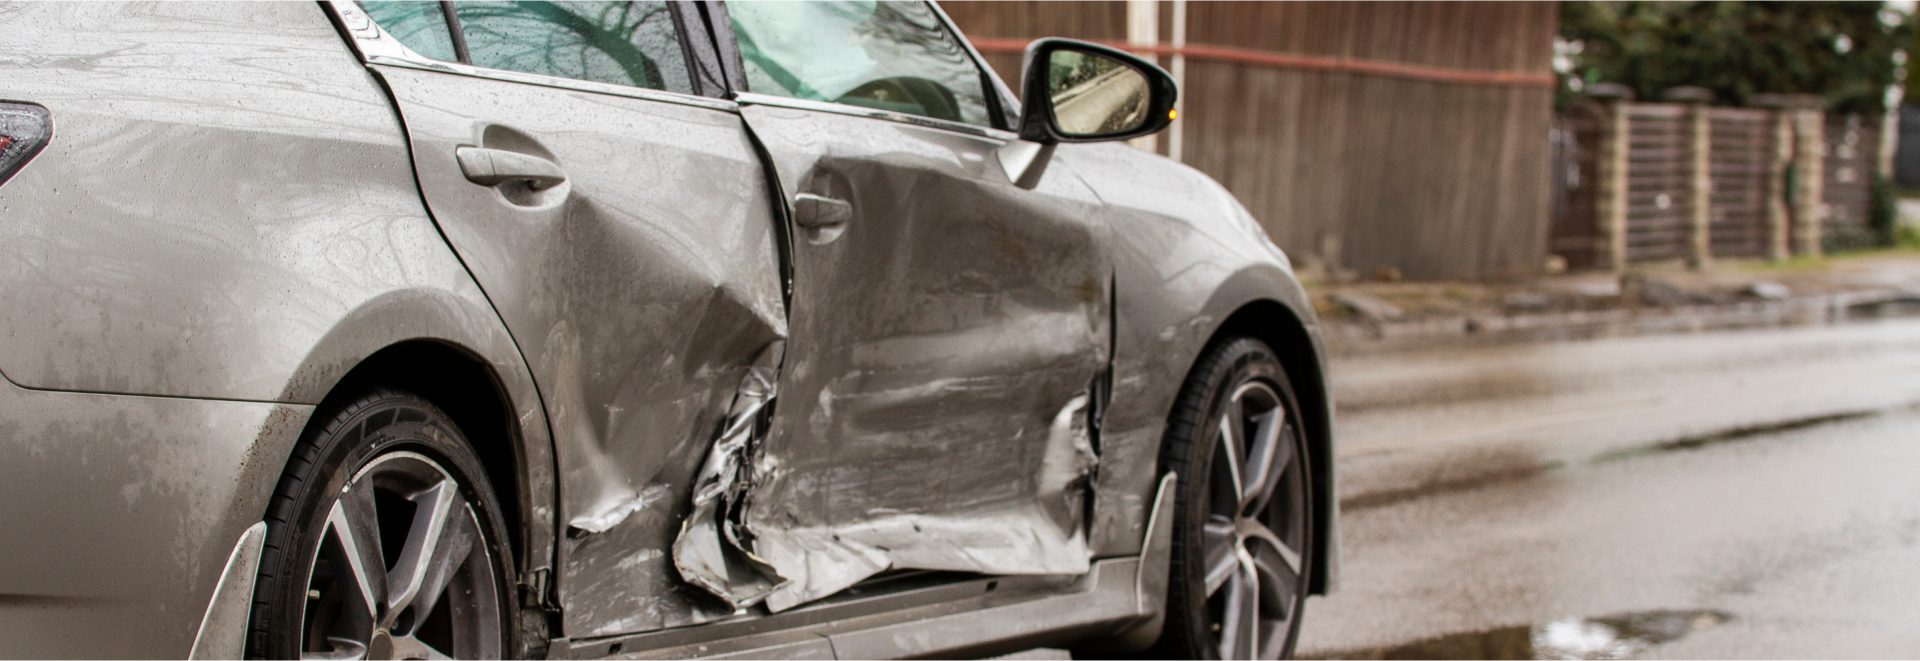 Car crash accident on the road Damaged automobiles after crash